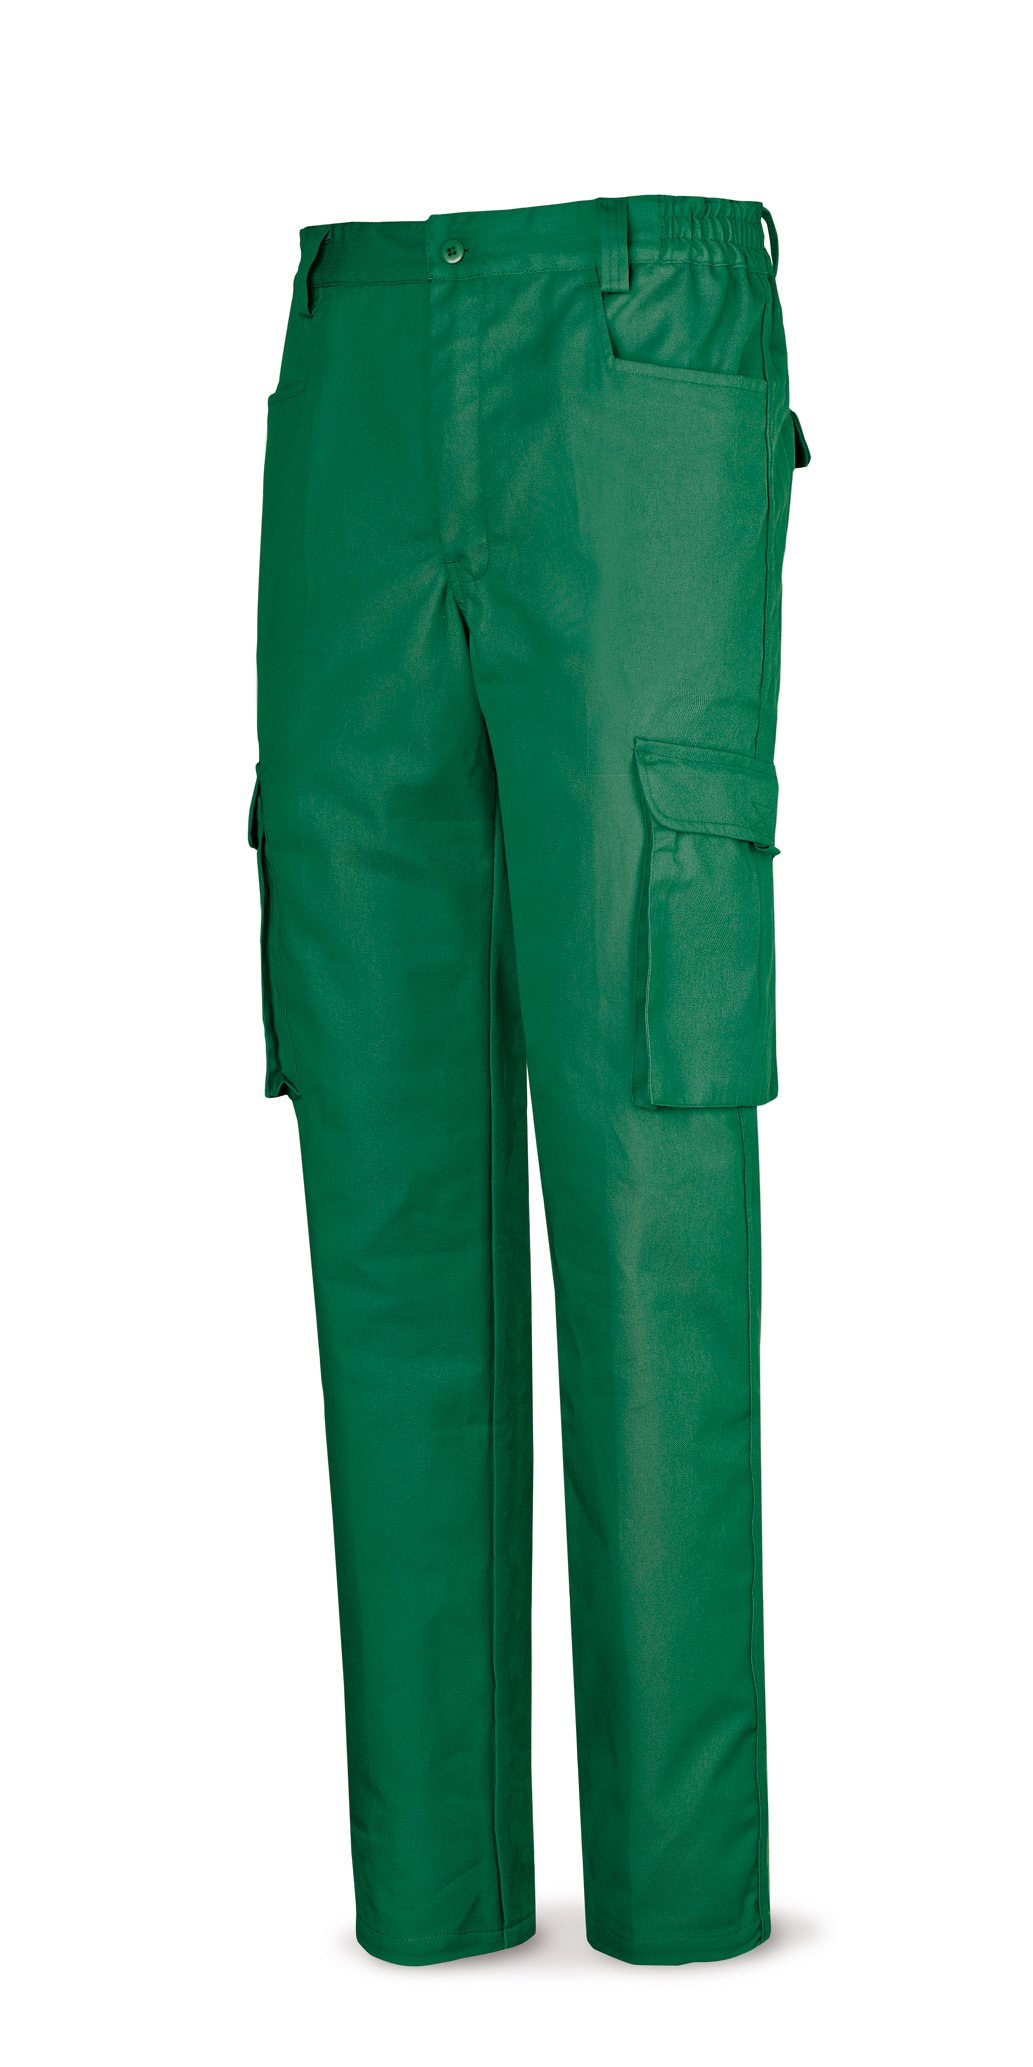 488-PV Top Workwear Top Series Tergal. Green.